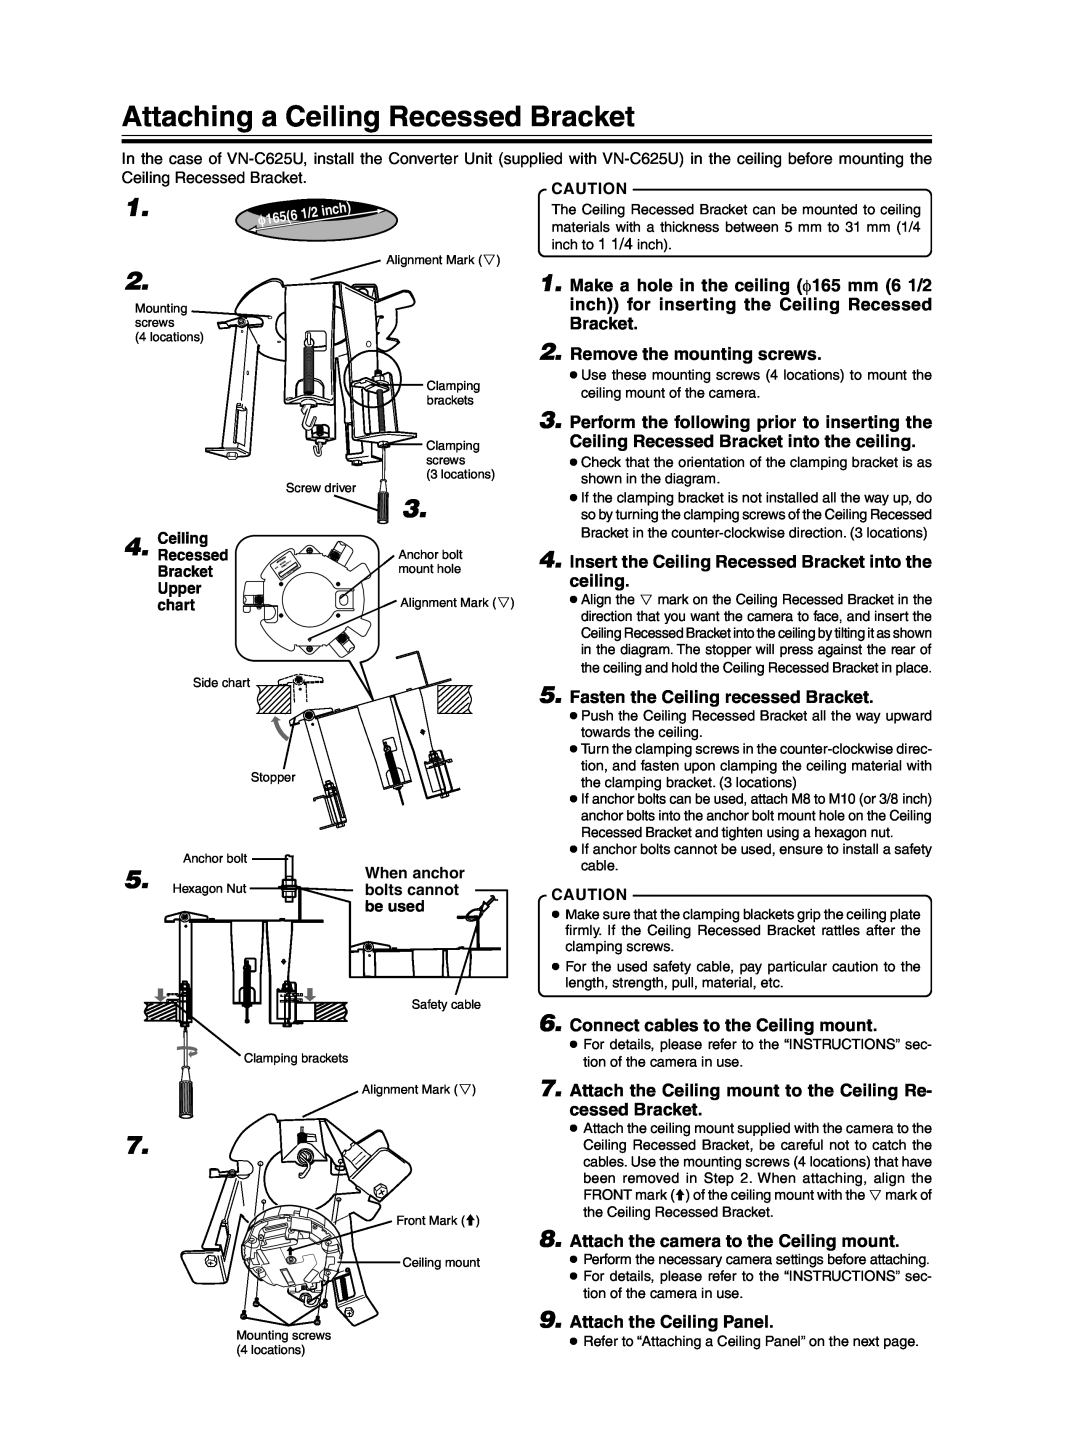 JVC WB-S625U instruction manual Attaching a Ceiling Recessed Bracket 